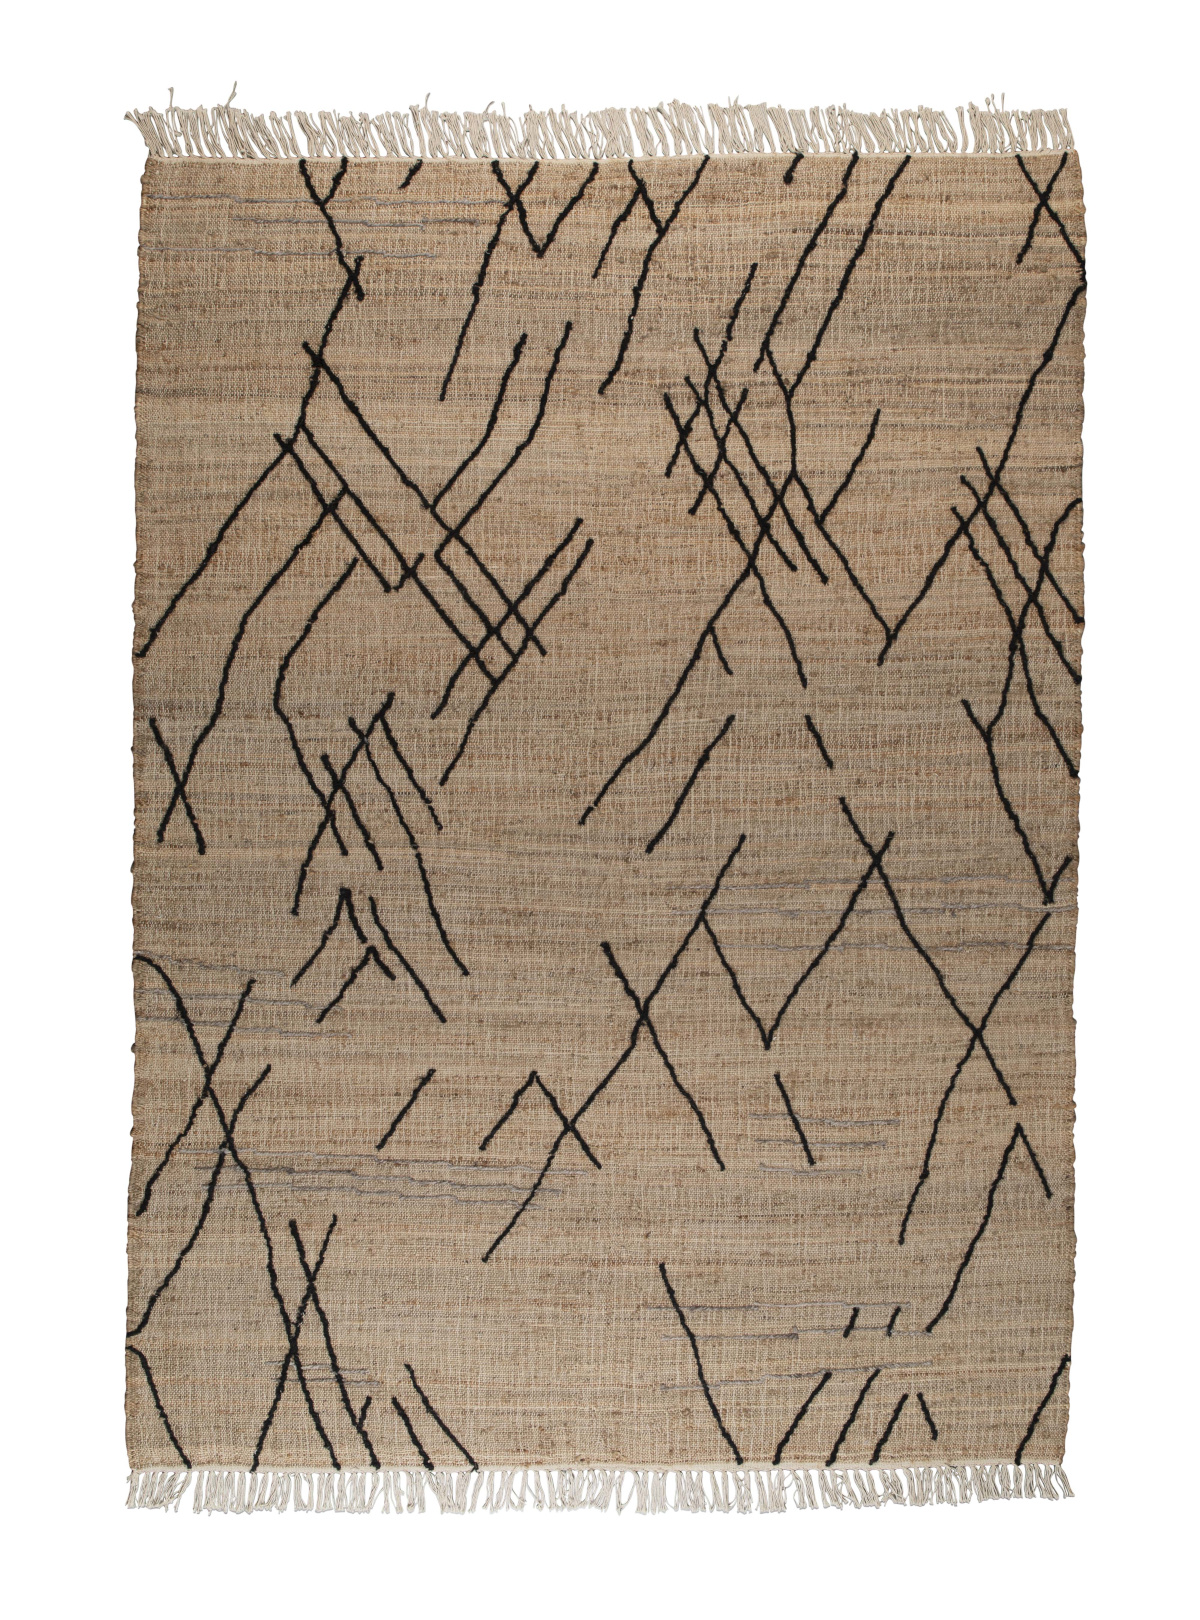 Ishank Teppich, 170 x 240 cm